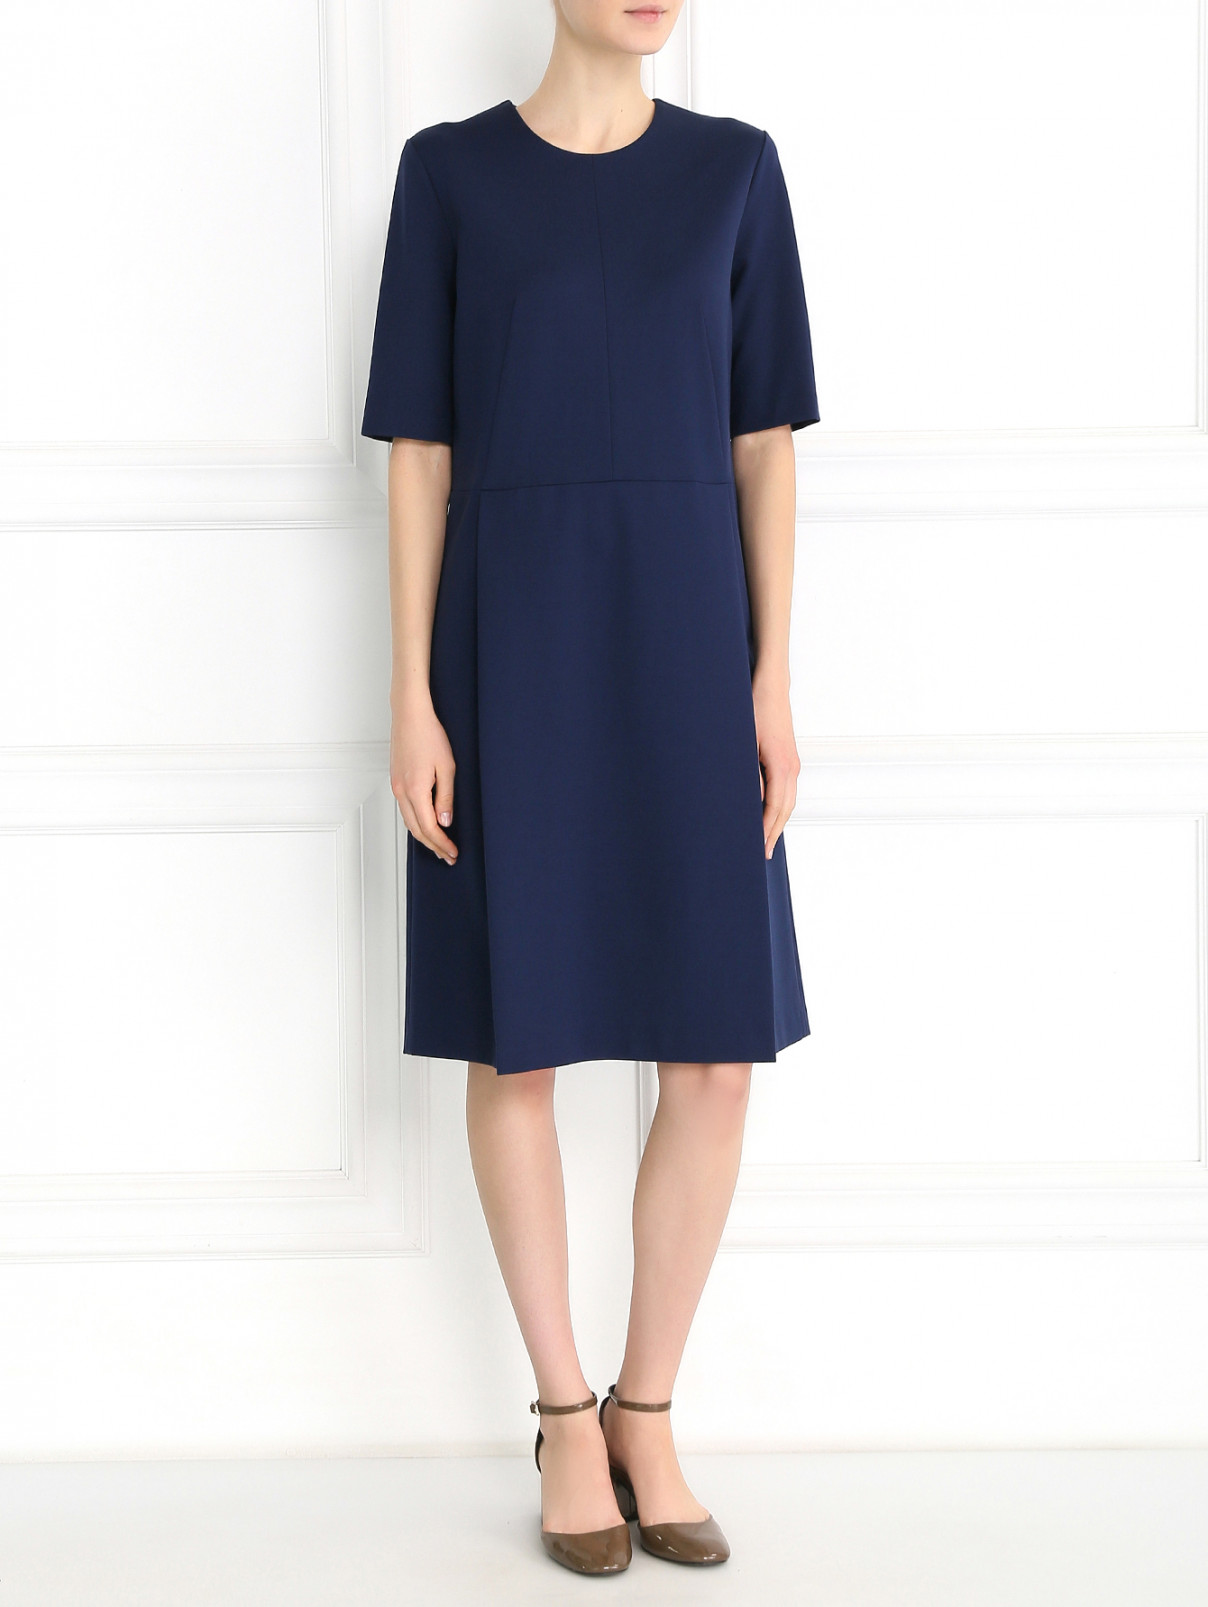 Платье прямого кроя Jil Sander  –  Модель Общий вид  – Цвет:  Синий